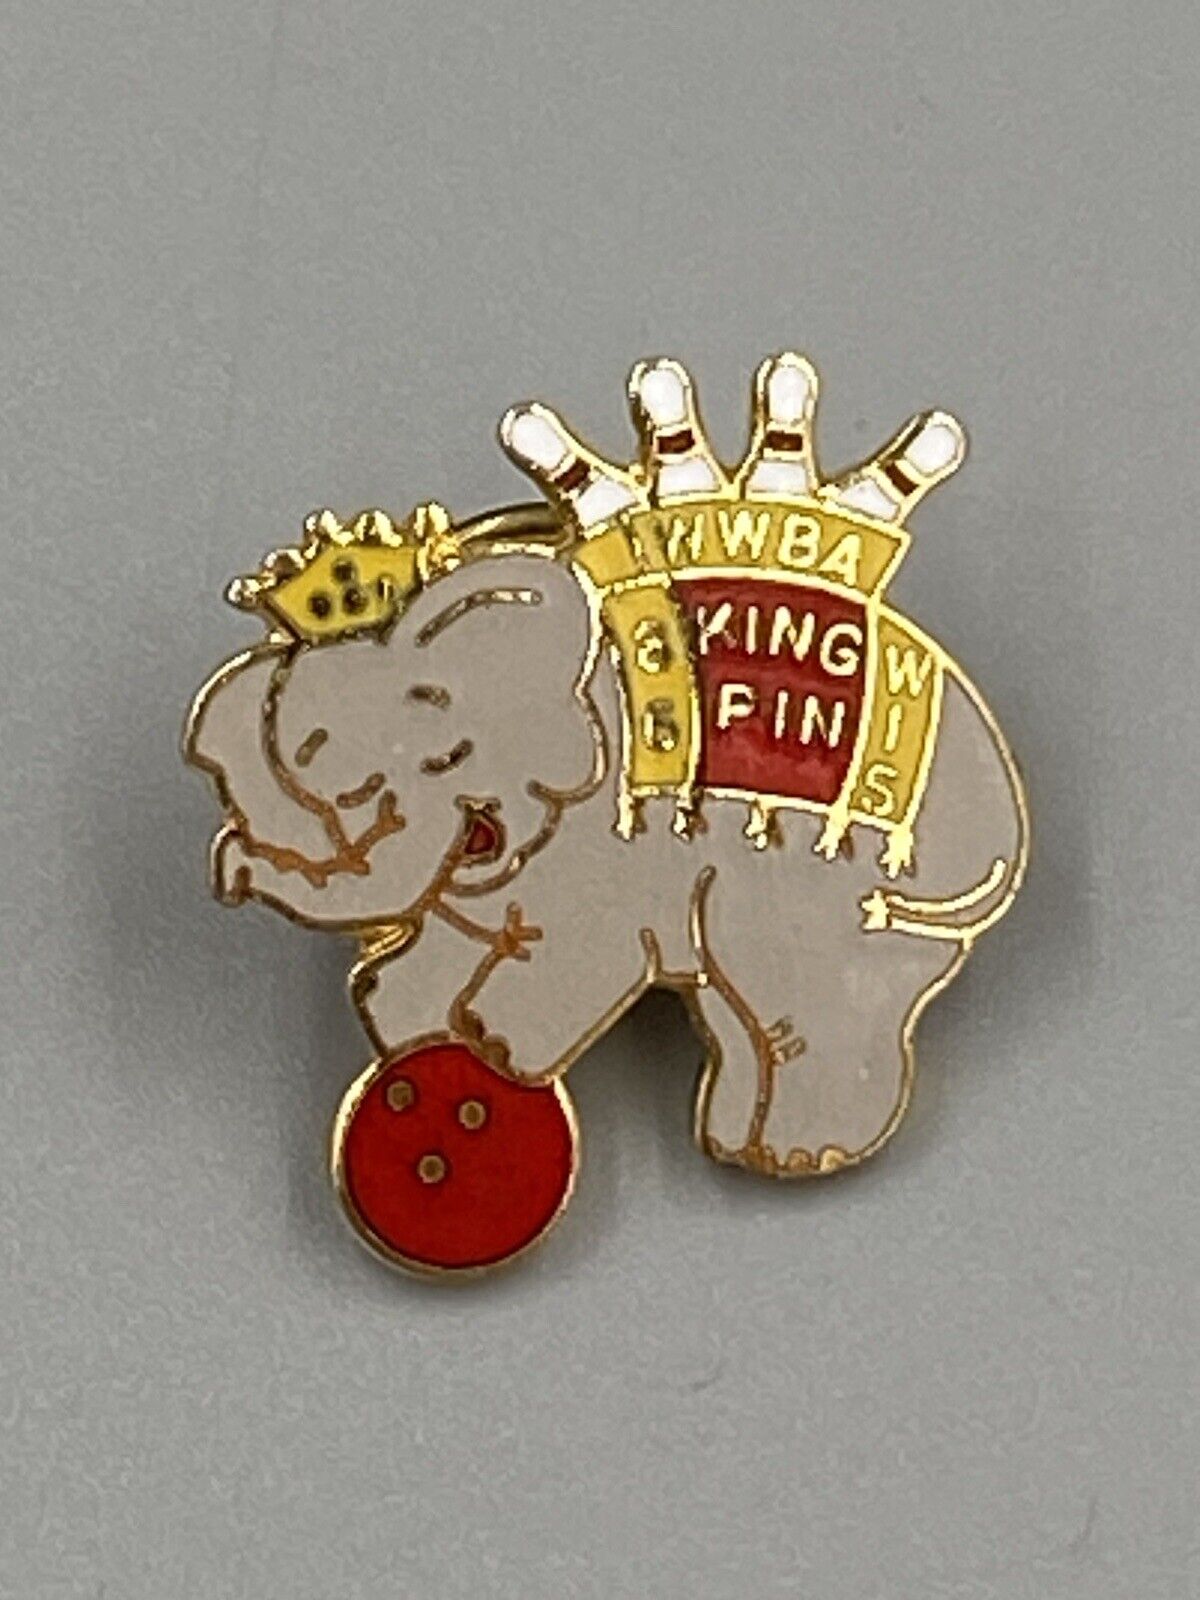 Vintage WWBA Elephant King Bowling Lapel Pin Brooch